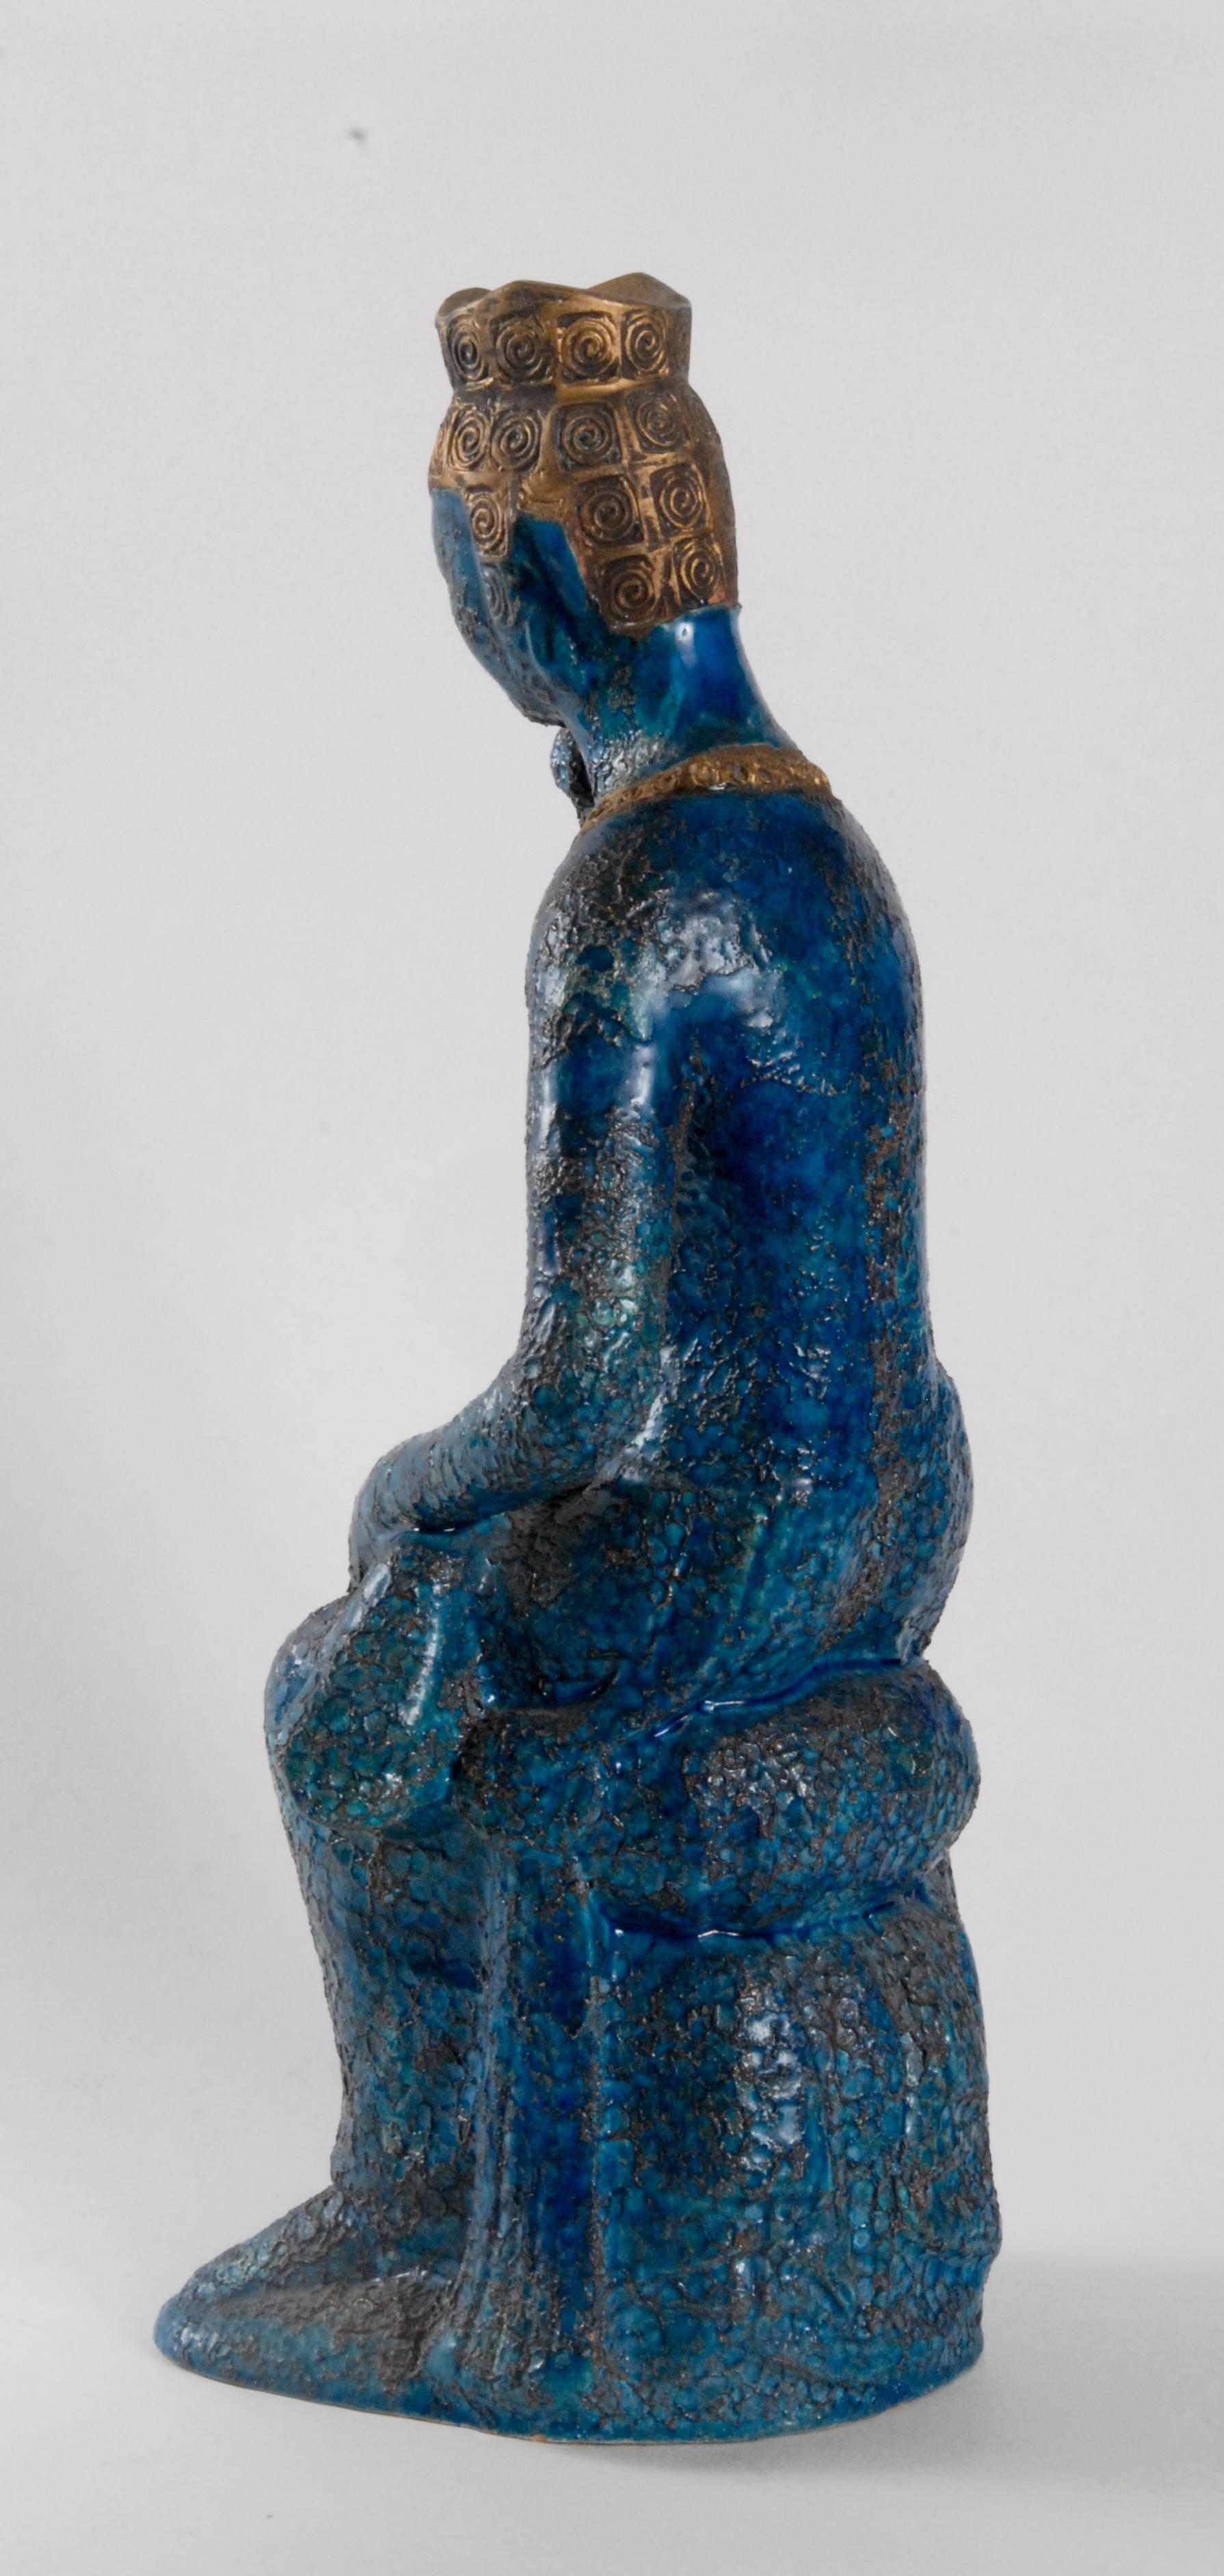 Hand-Crafted Bitossi Buddha, 'Cinese' Glaze, Londi, Italy, circa 1965